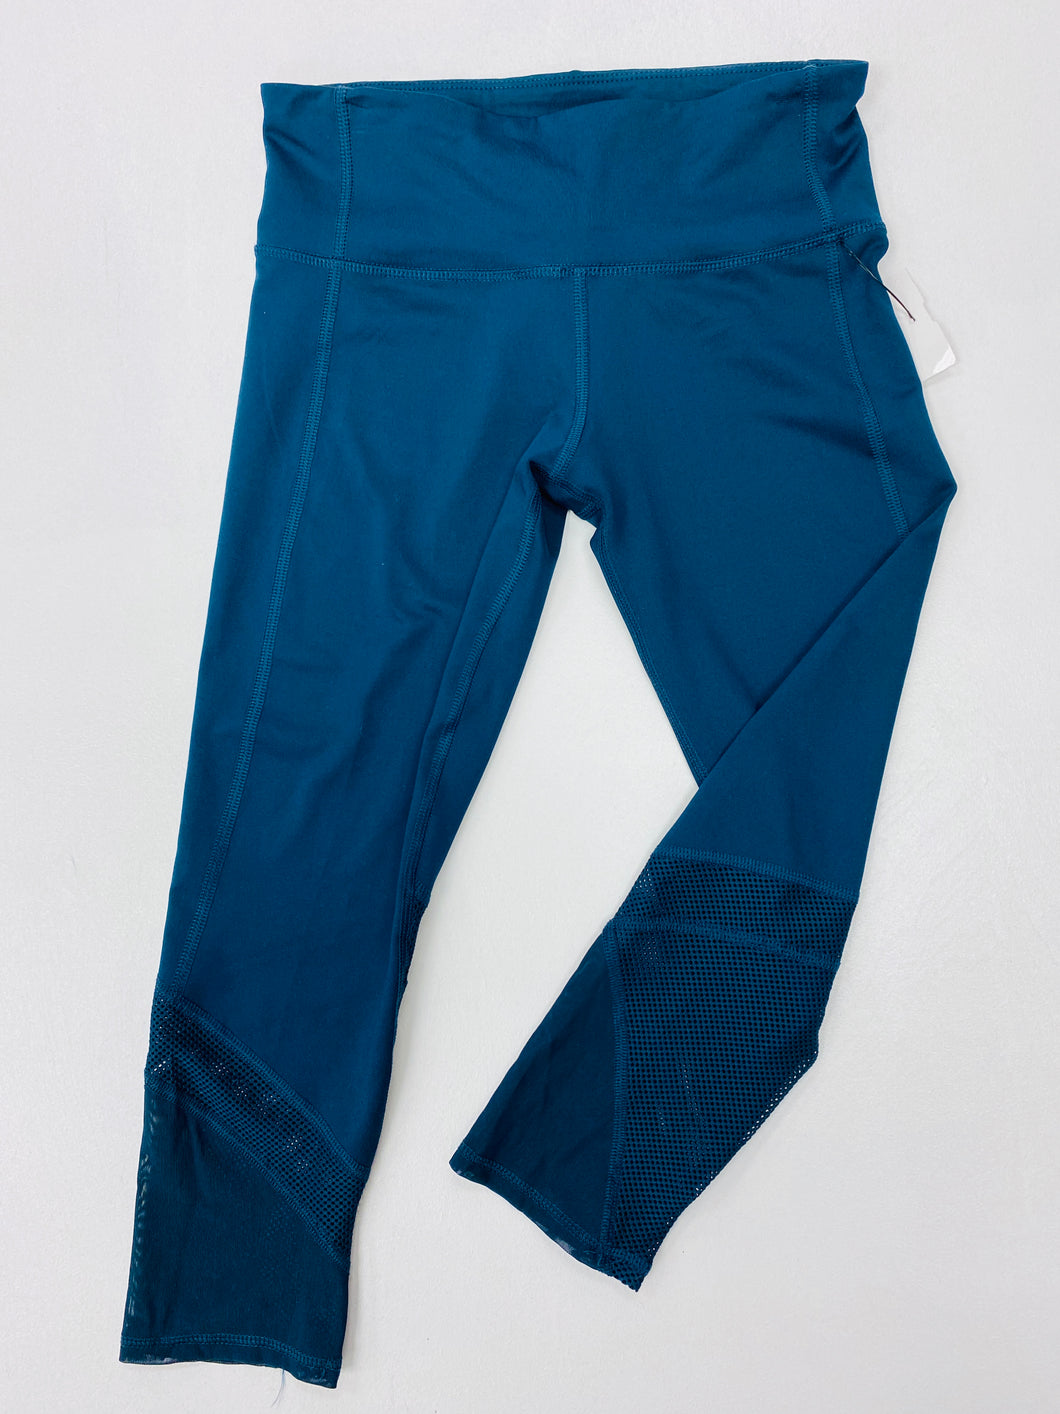 Old Navy Womens Athletic Pants Extra Large-4A0018B6-5DDF-420B-ACA1-2D4729625C2F.jpeg